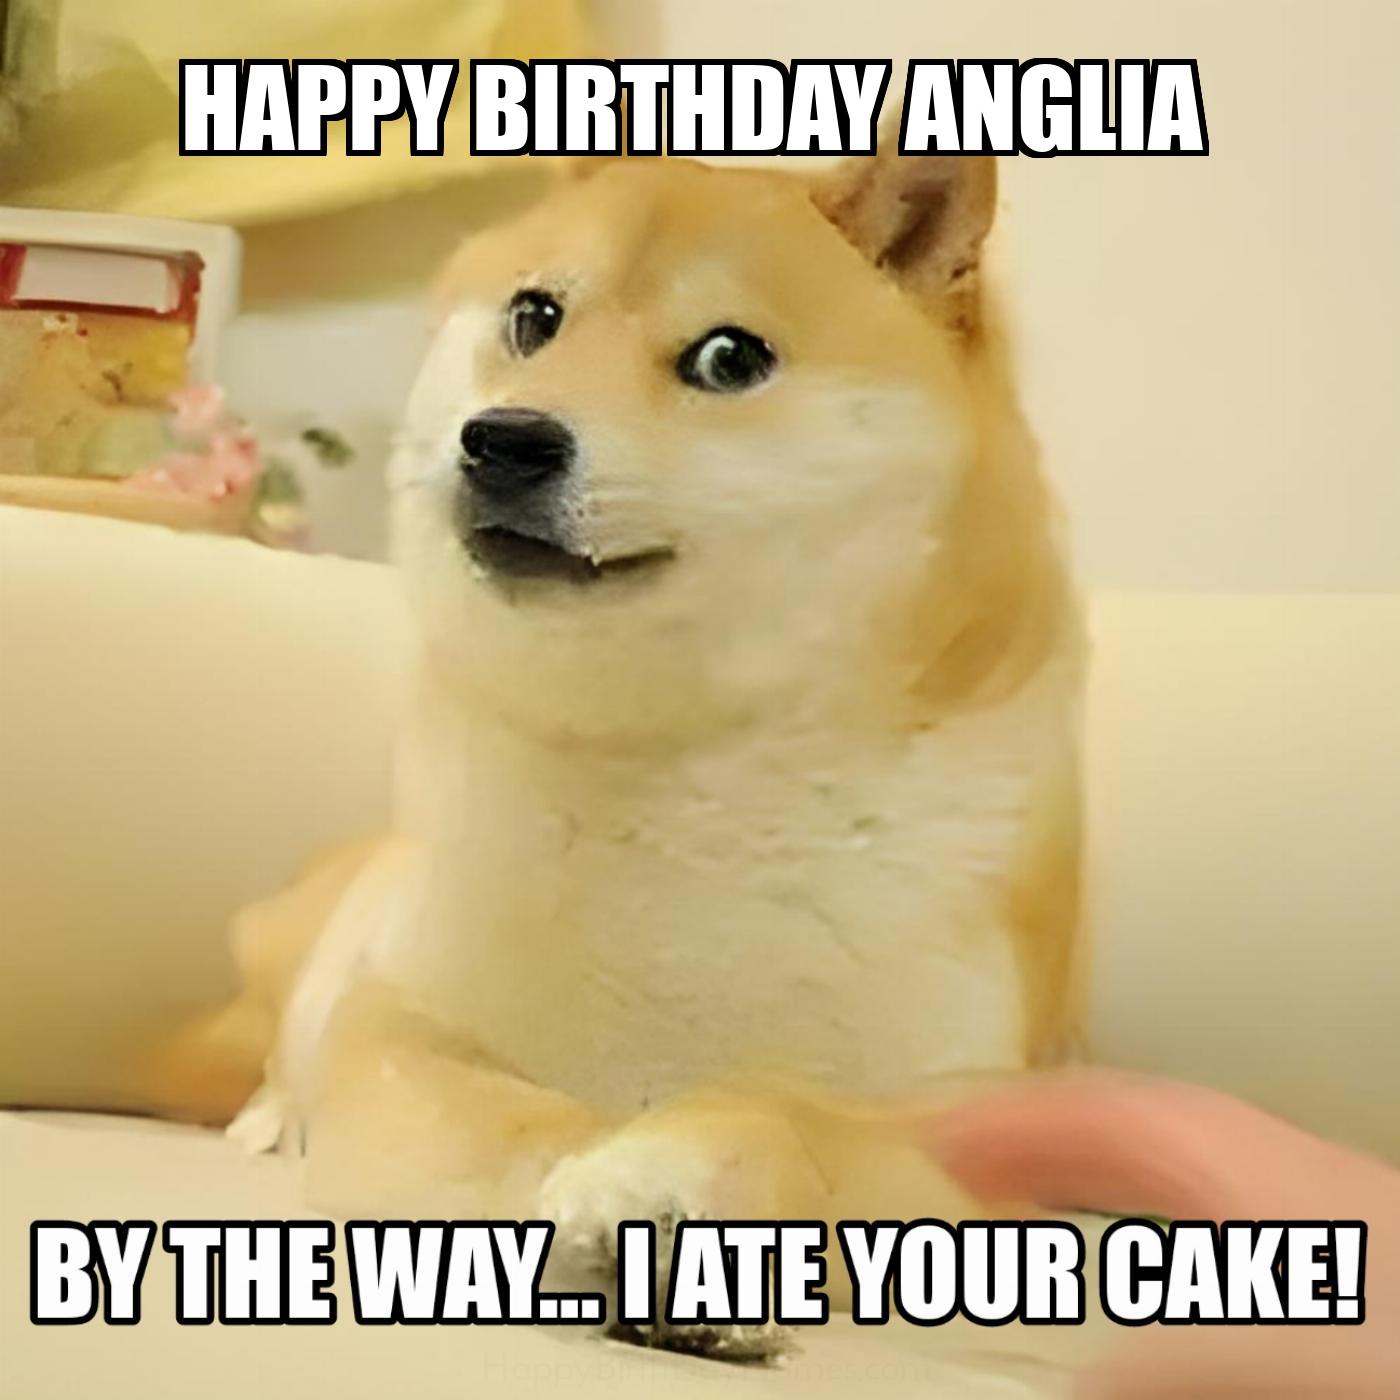 Happy Birthday Anglia BTW I Ate Your Cake Meme